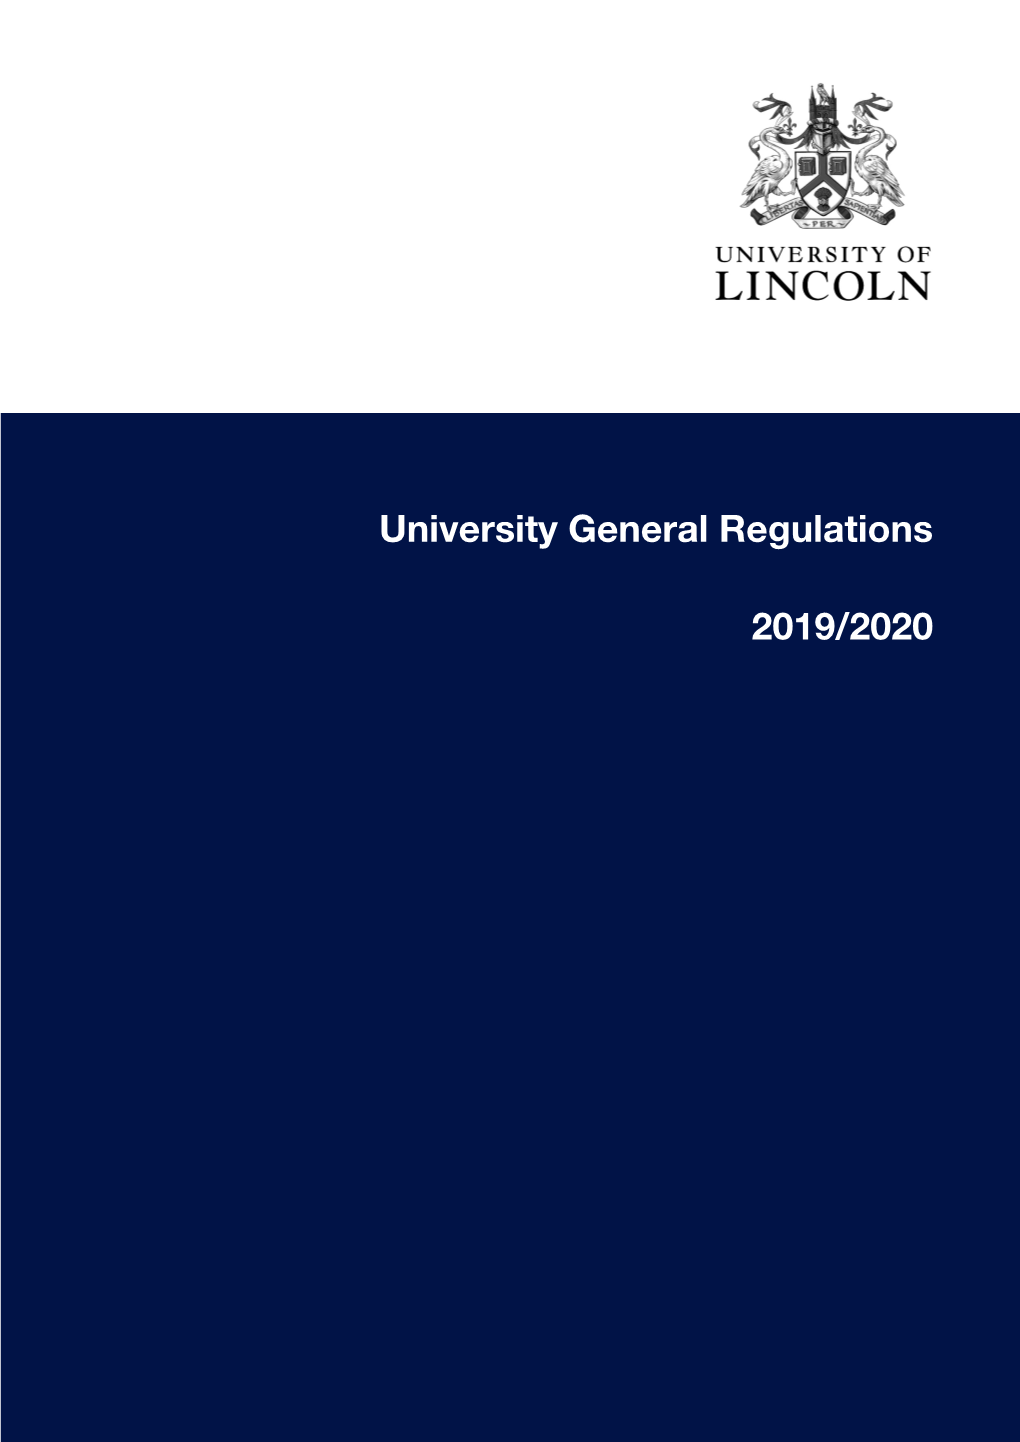 University General Regulations 2019/2020